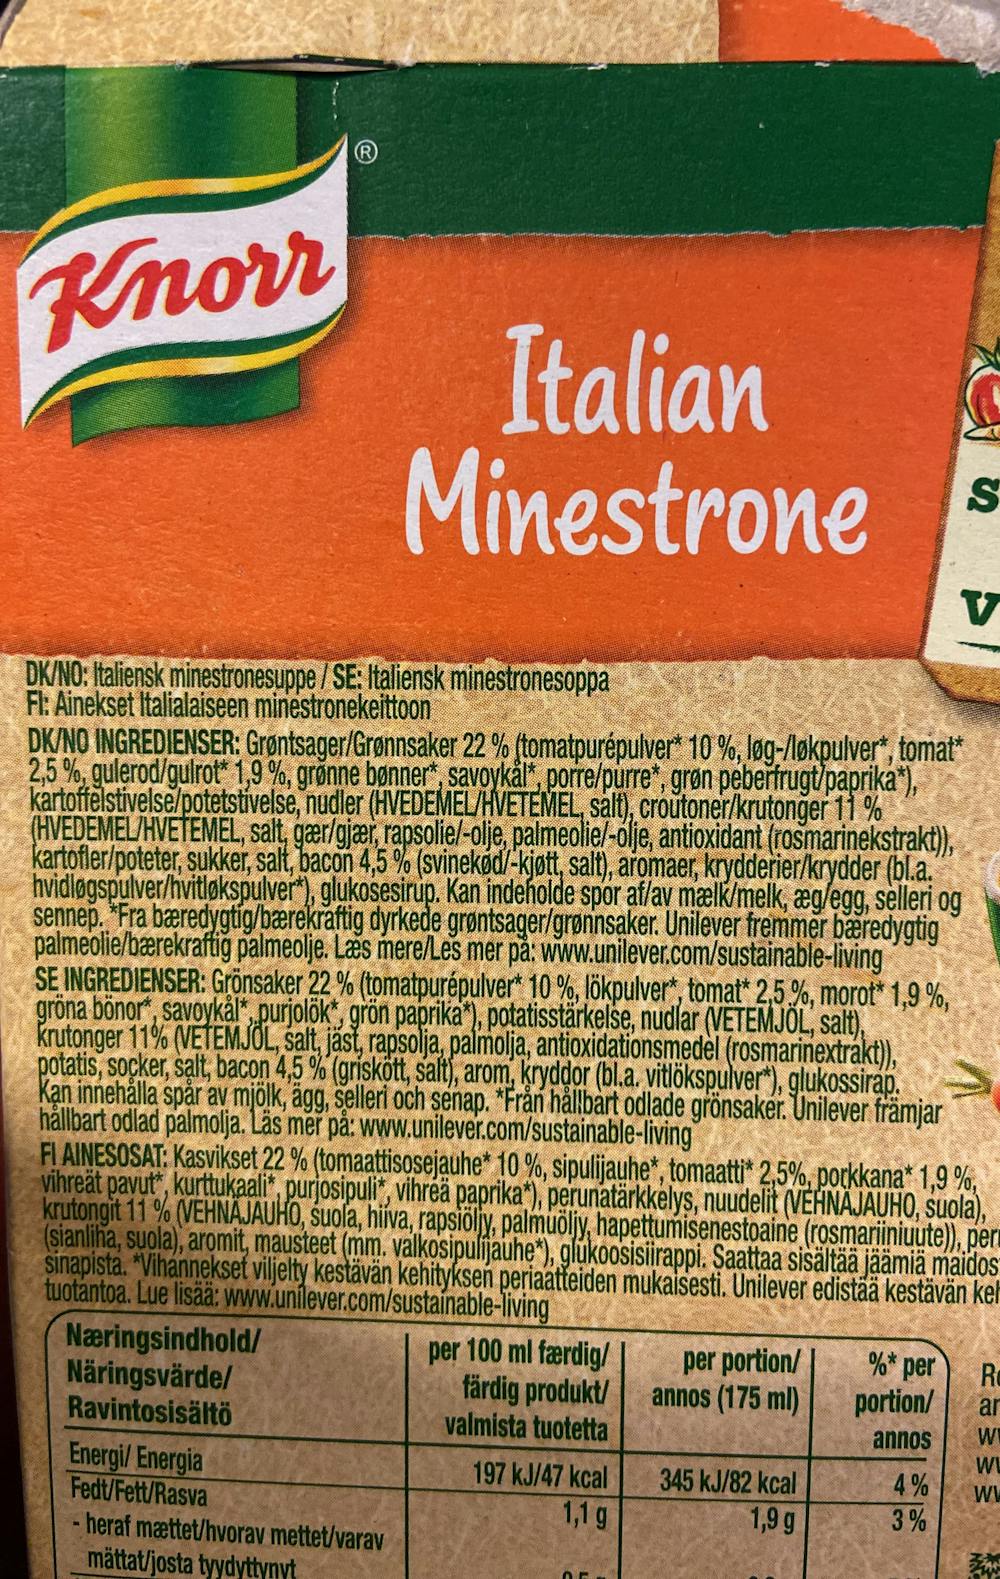 Ingredienslisten til Knorr Italian minestrone